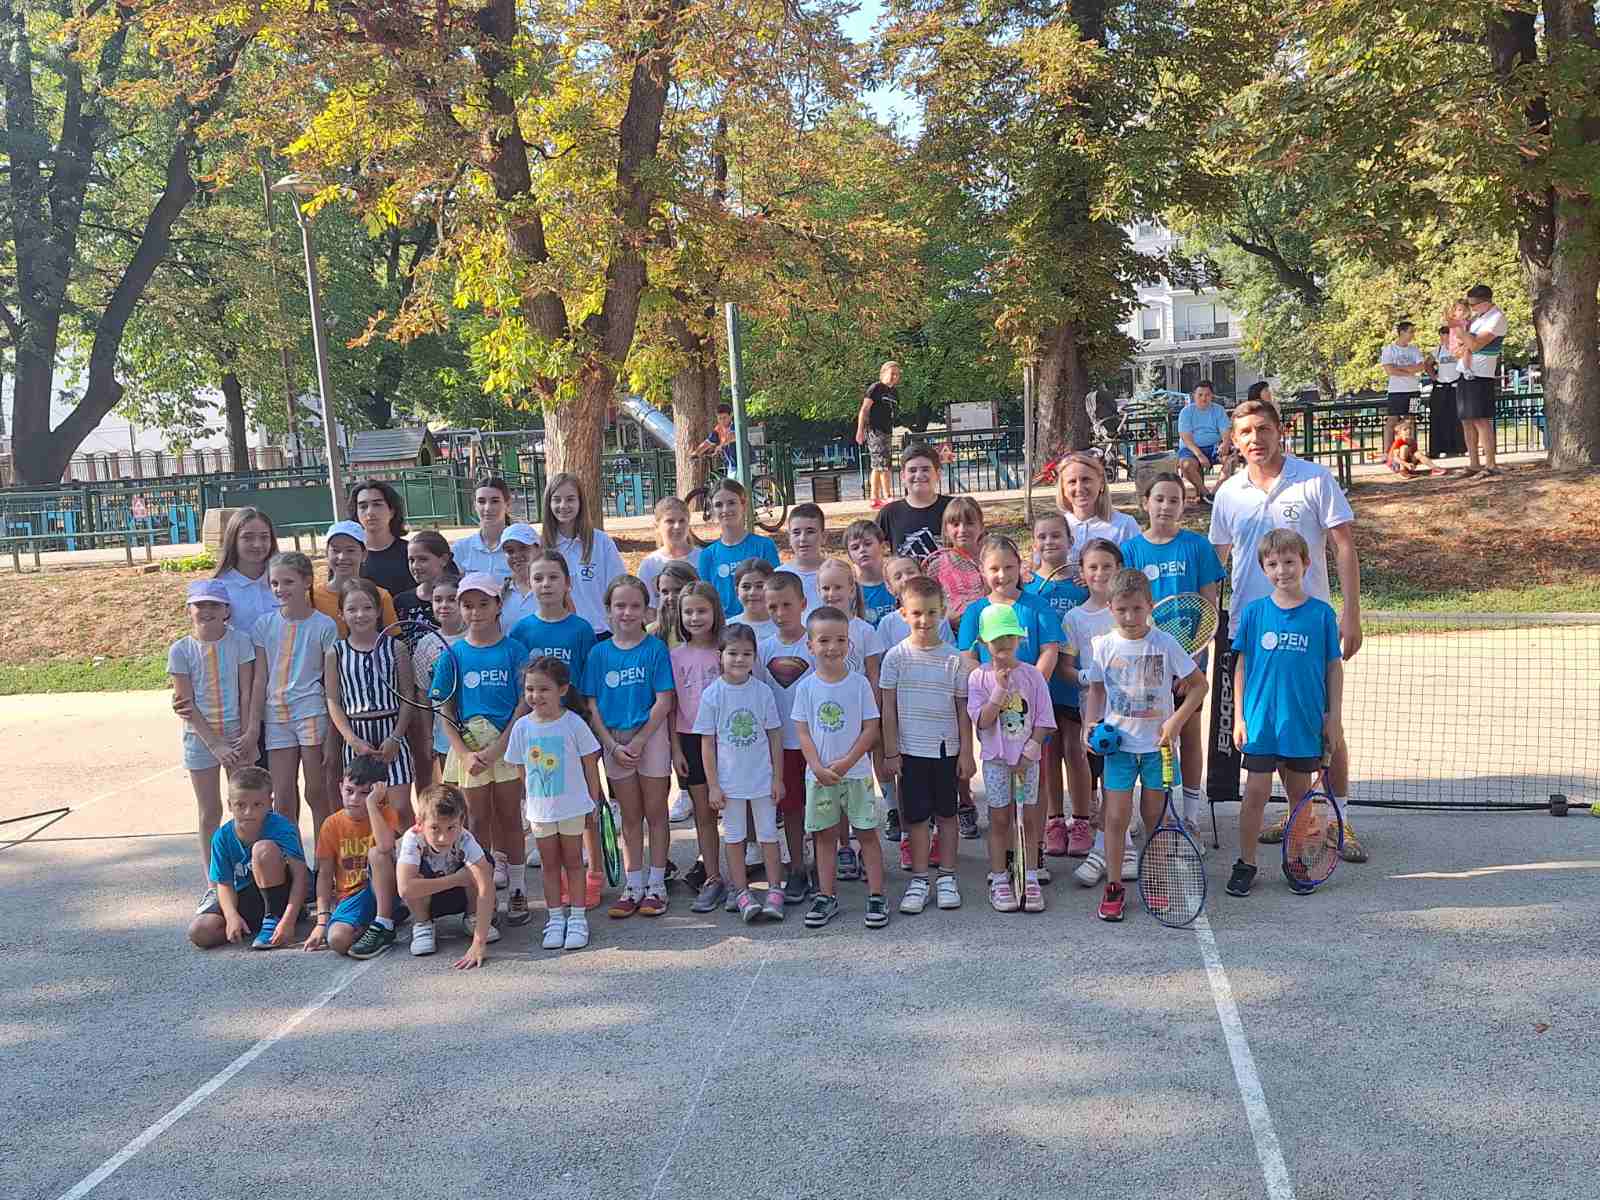 U Gradskom parku održana promocija teniskog kluba "AS" FOTO